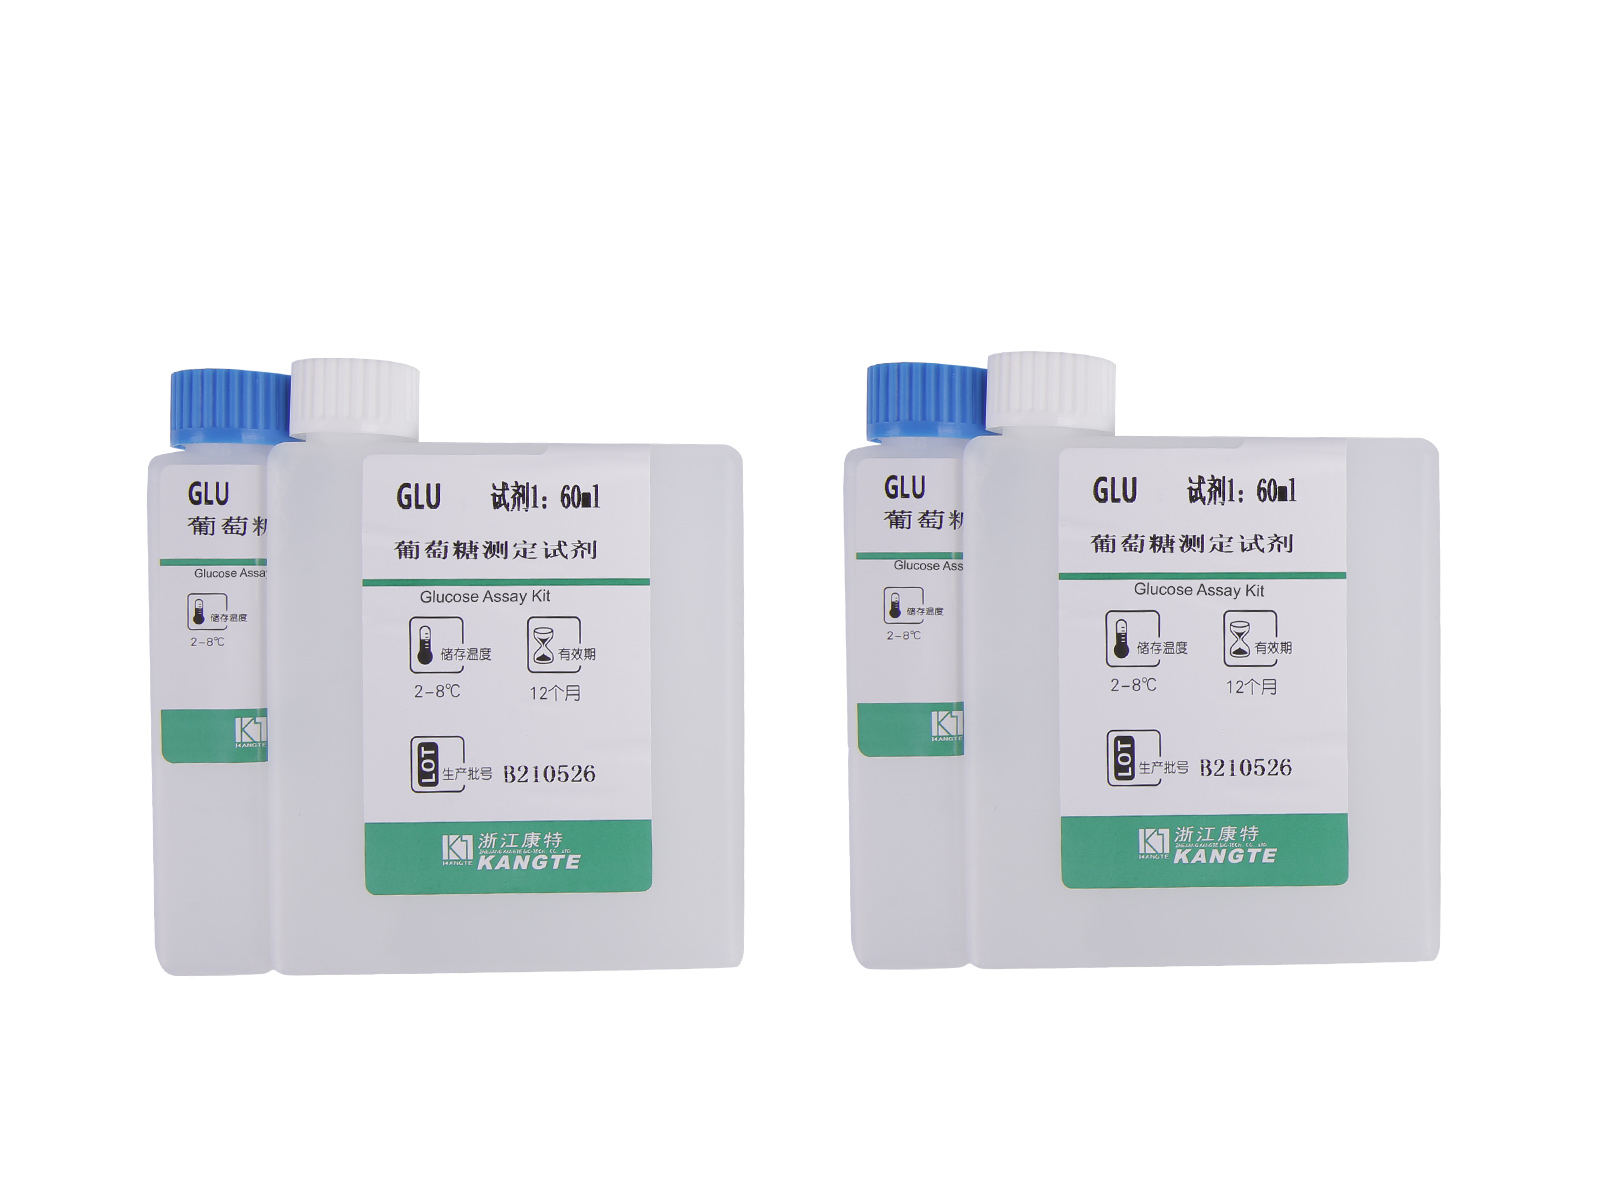 【GLU】Kit de dosage du glucose (méthode hexokinase)